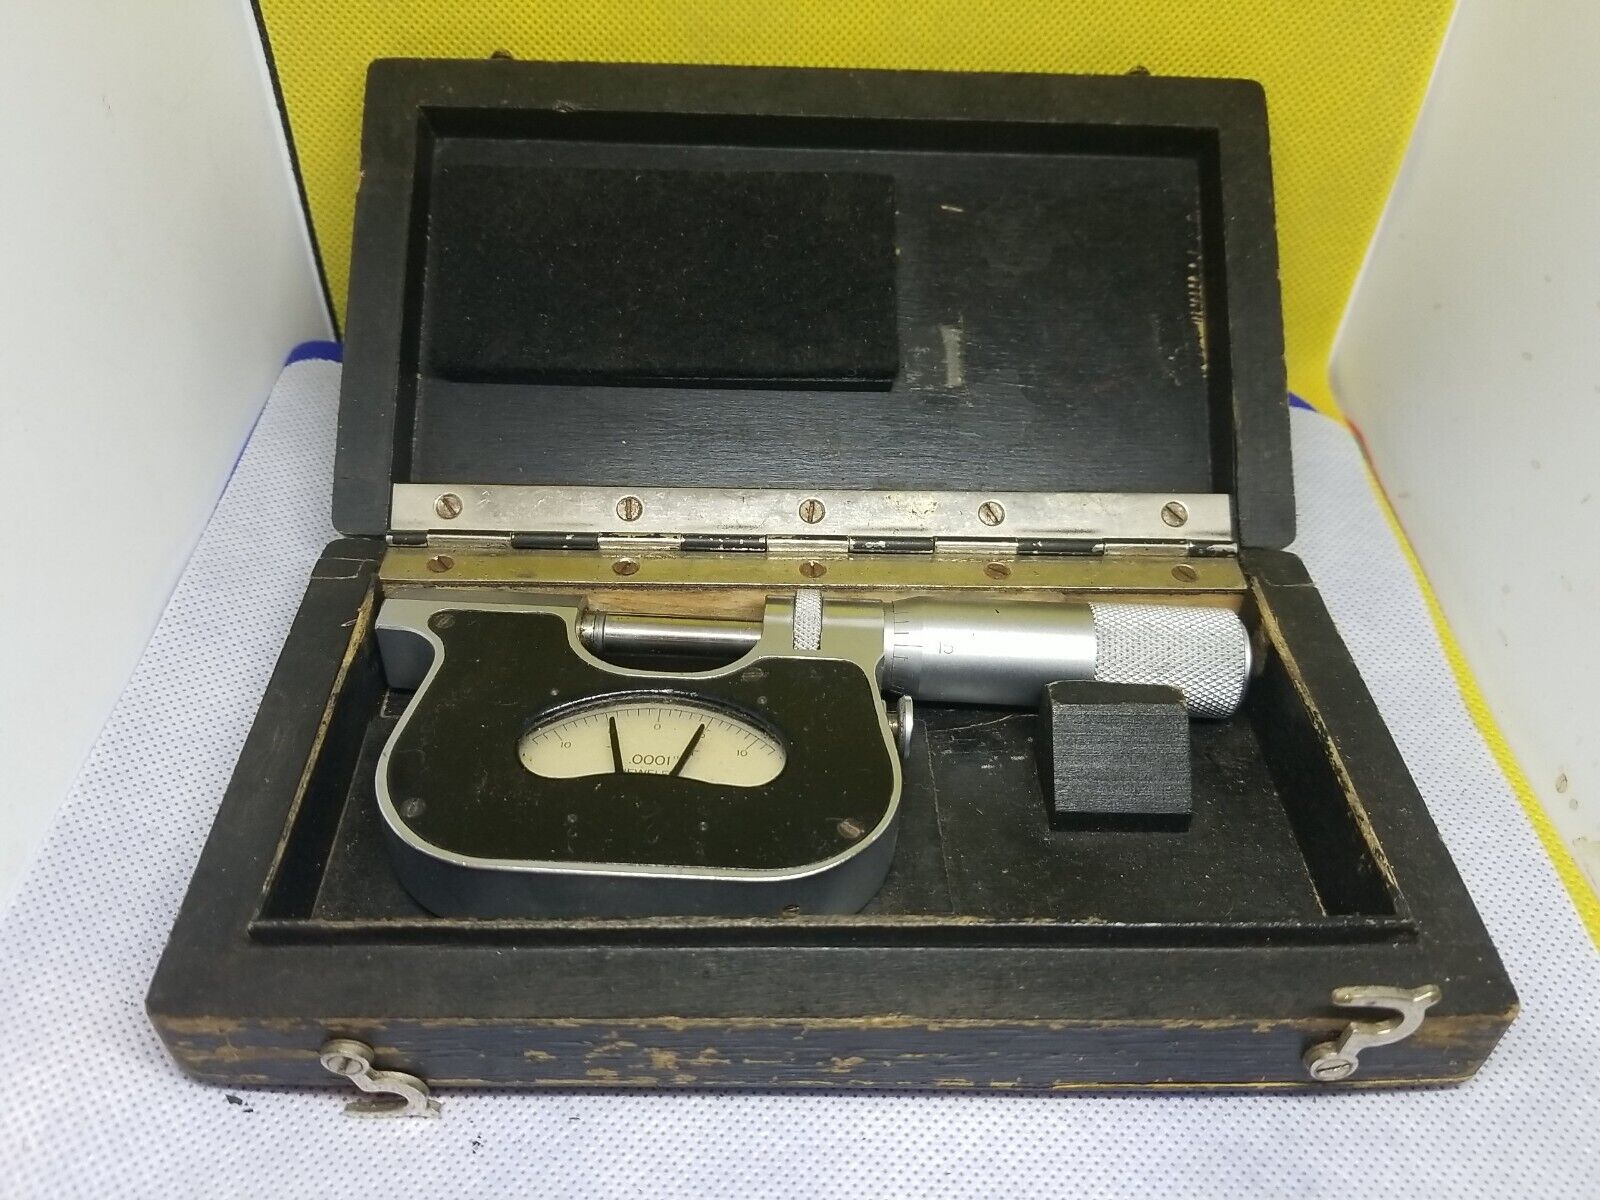 Vintage Carl Mahr Esslingen a.N Jeweled 0.0001”Indicating Micrometer